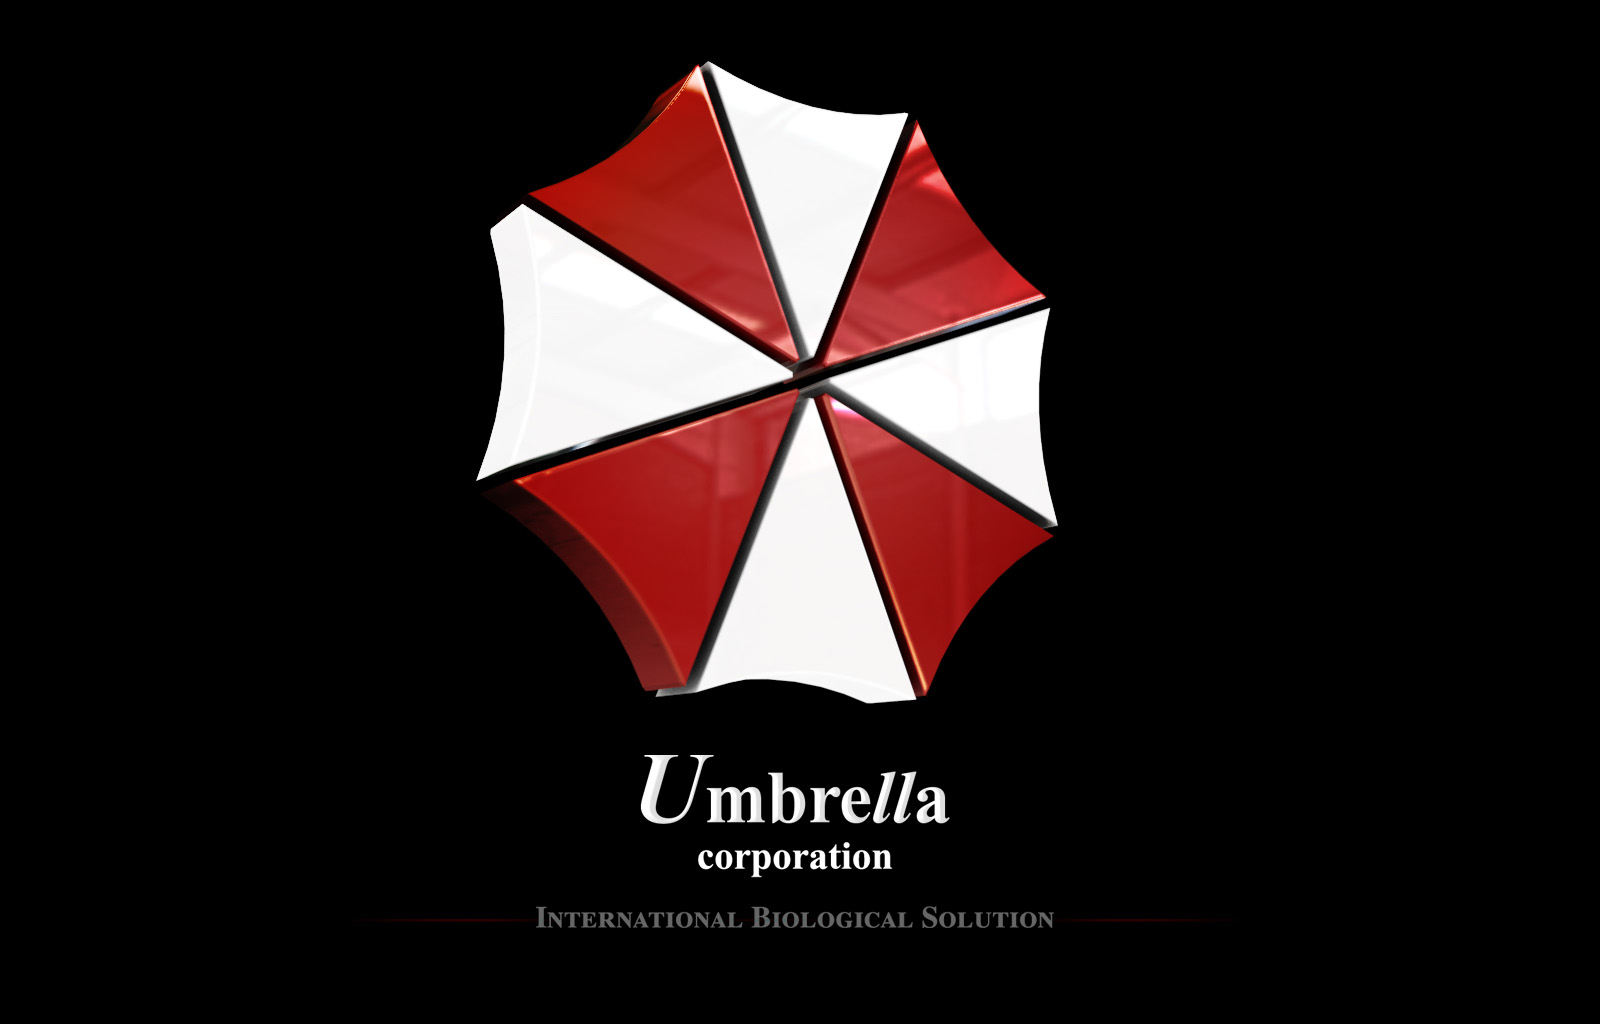 Umbrella Corporation Wallpaper by pedroqn on